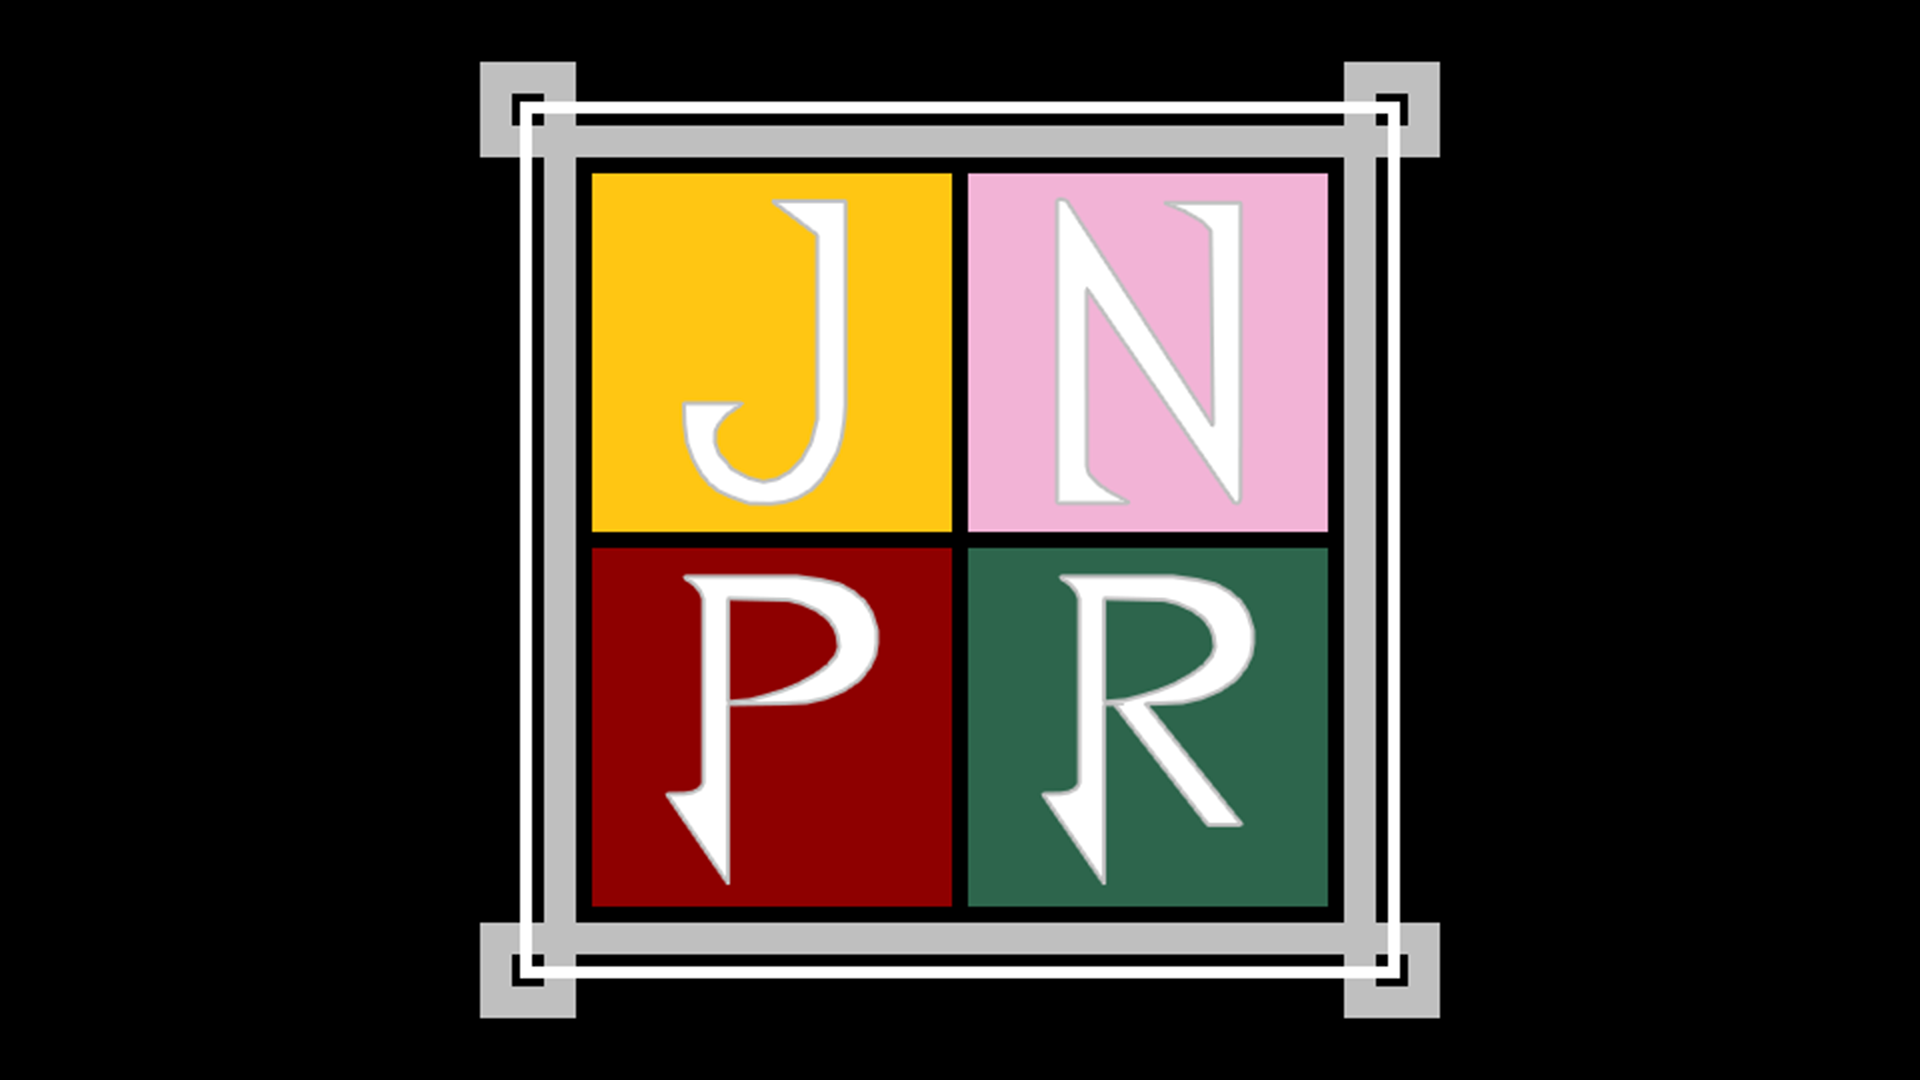 Go Team JNPR!